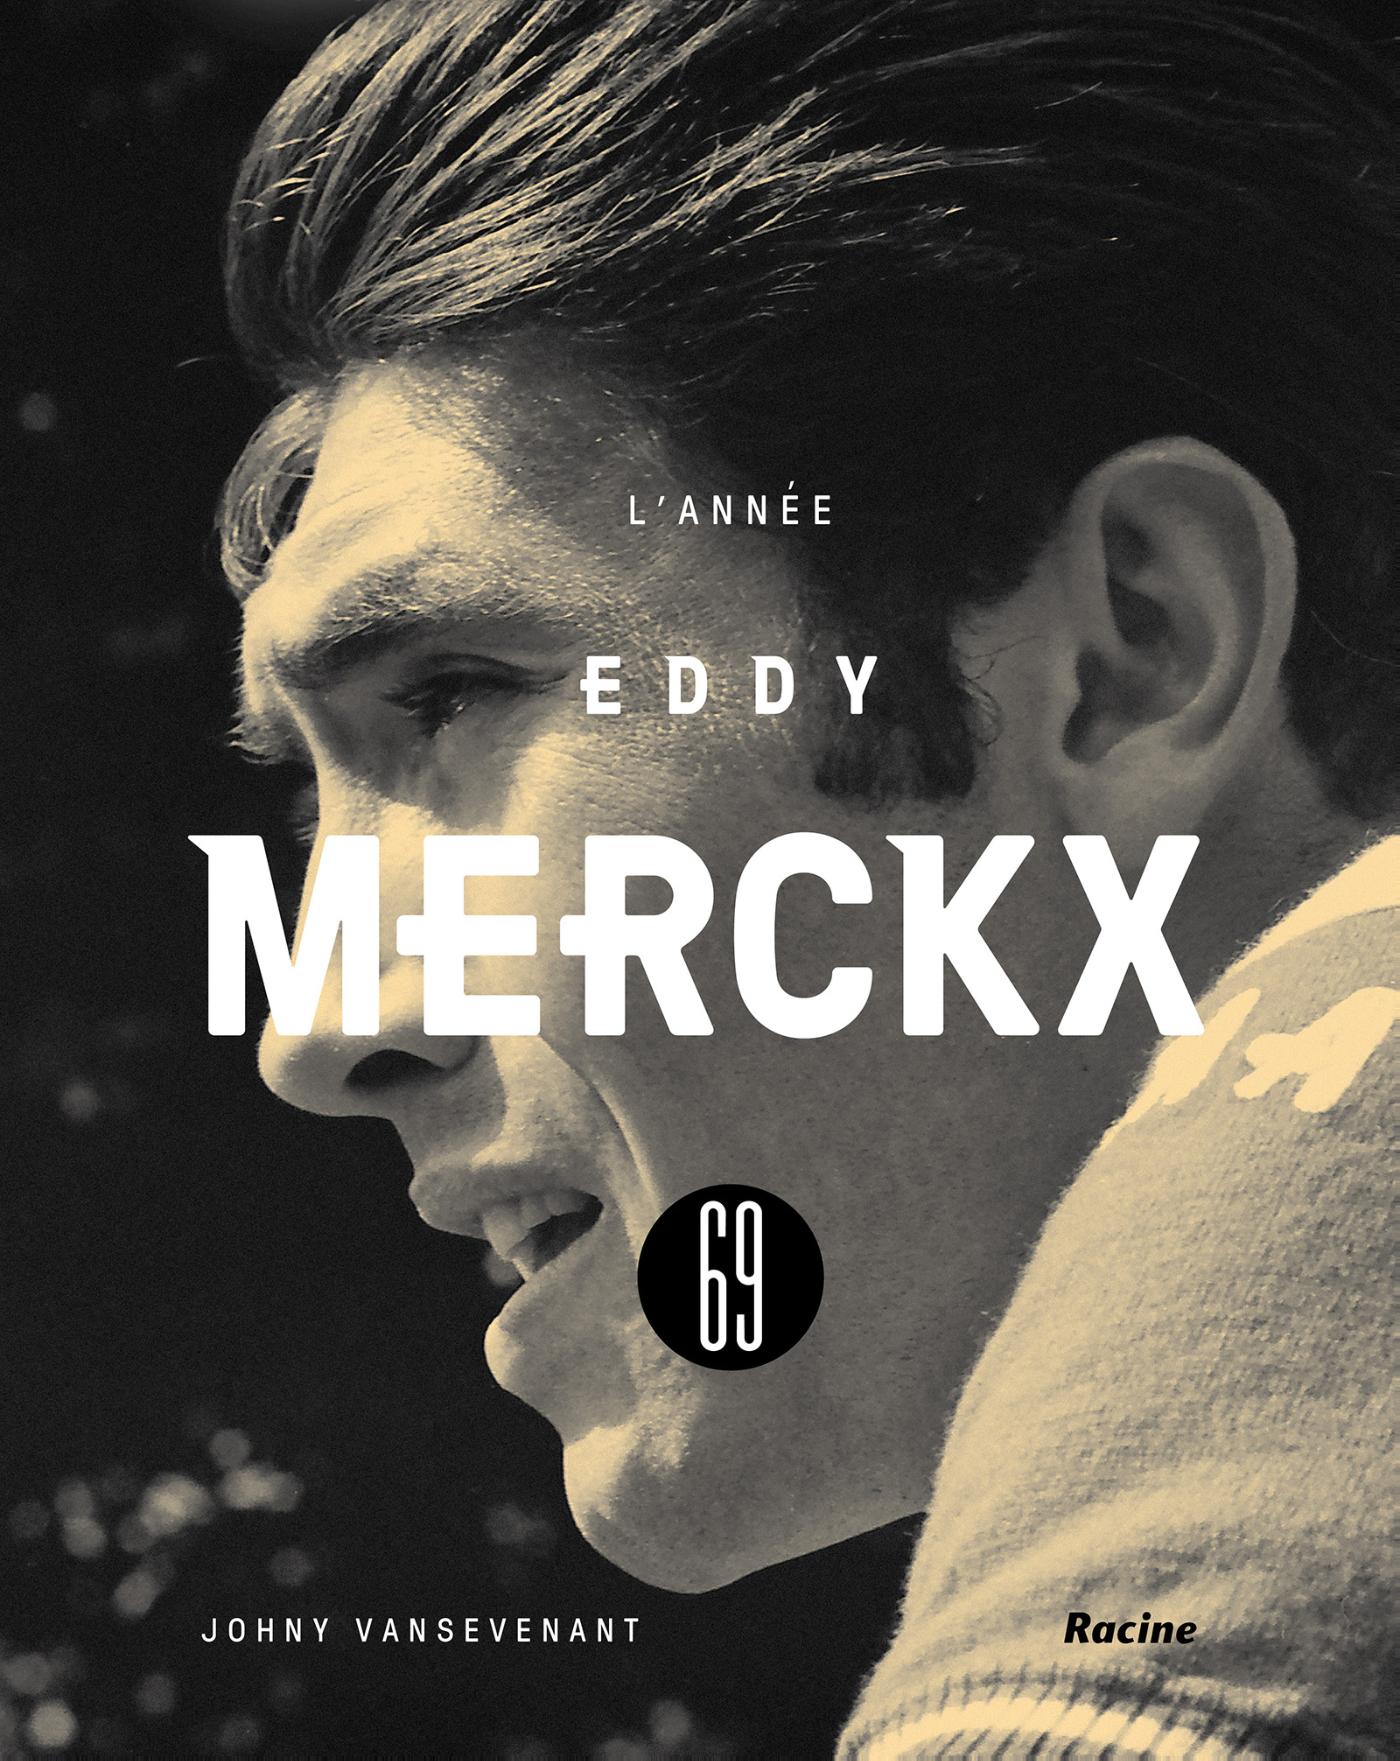 1969 - L'année Eddy Merckx